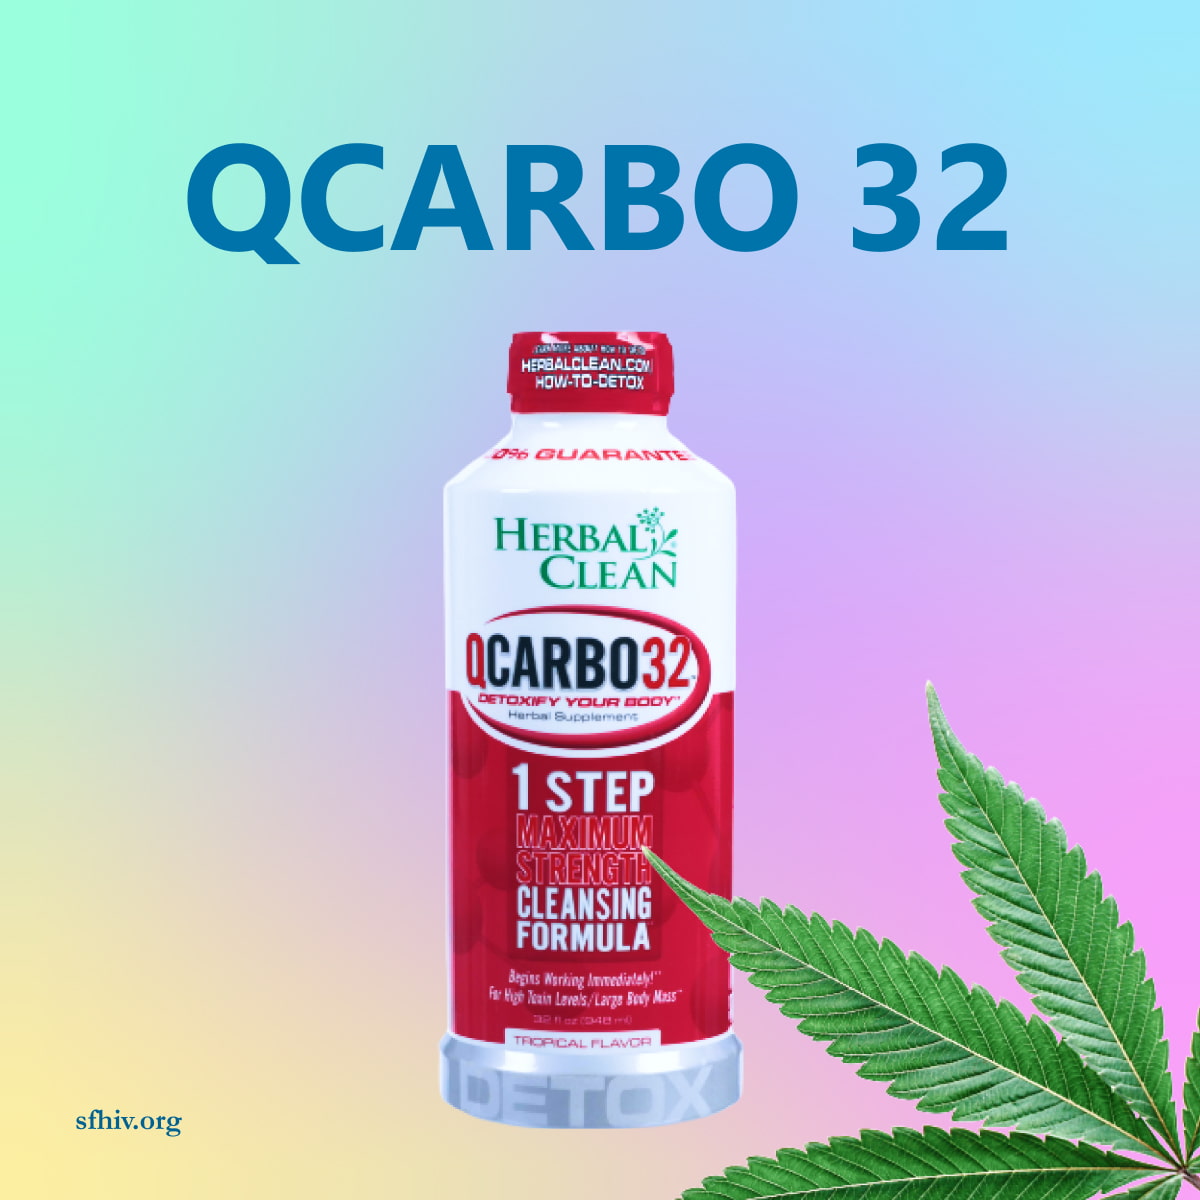 Qcarbo32